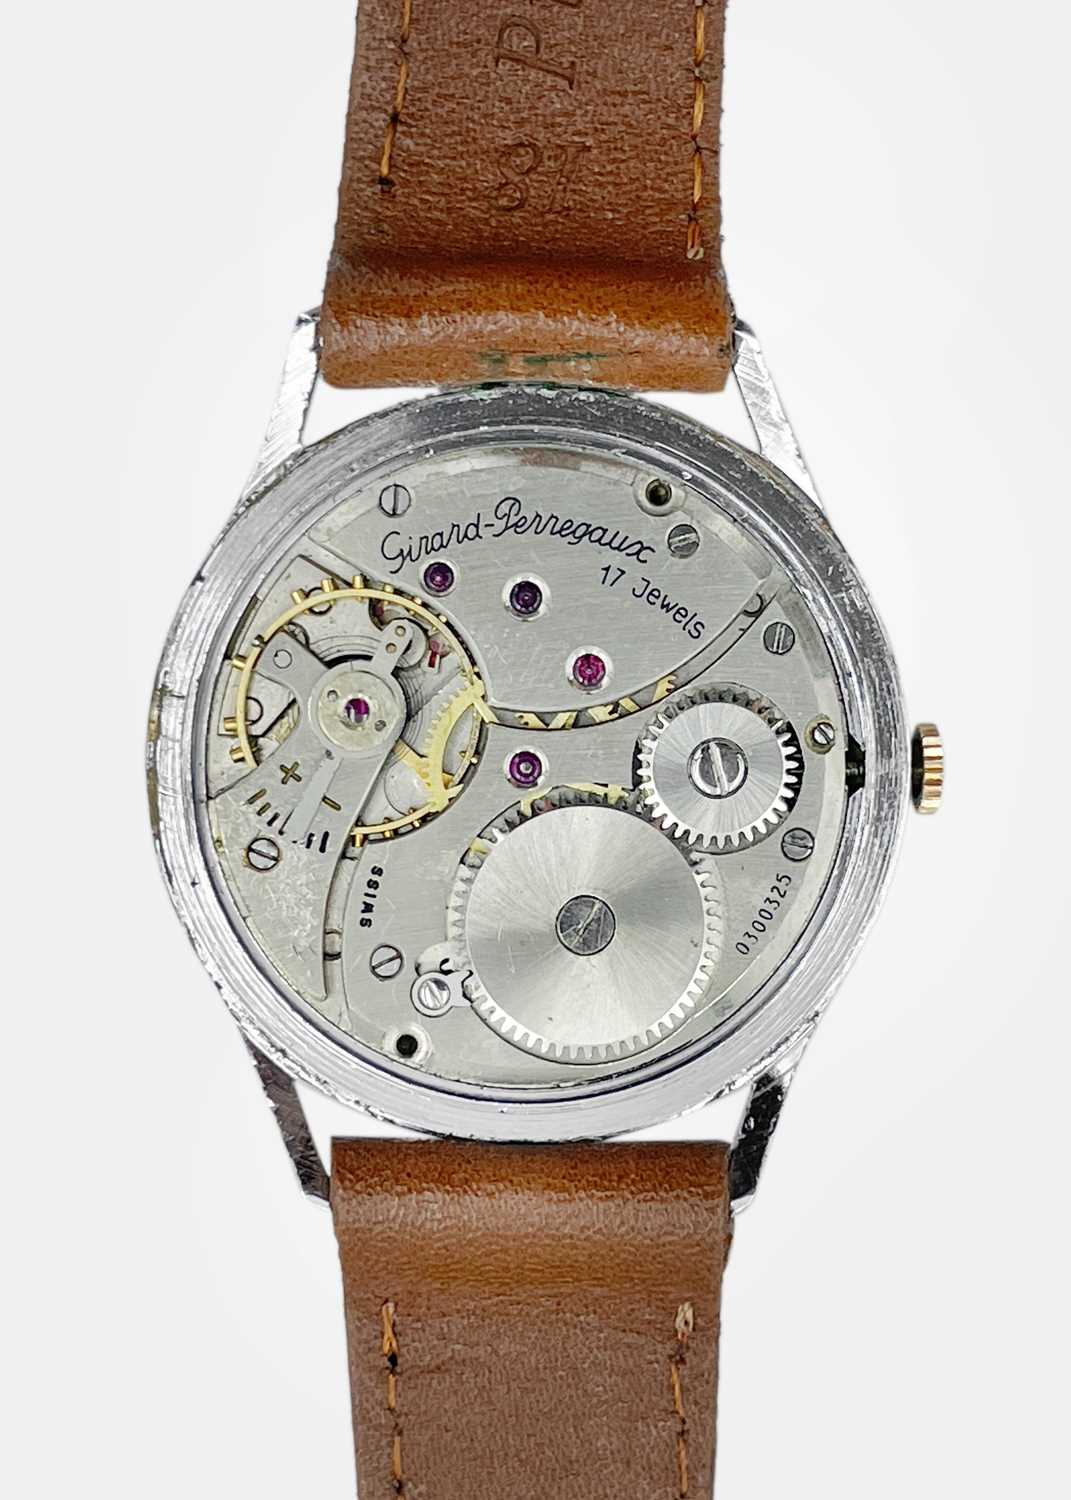 GIRARD-PERREGAUX - A stainless steel manual wind gentleman's wristwatch. - Image 4 of 4